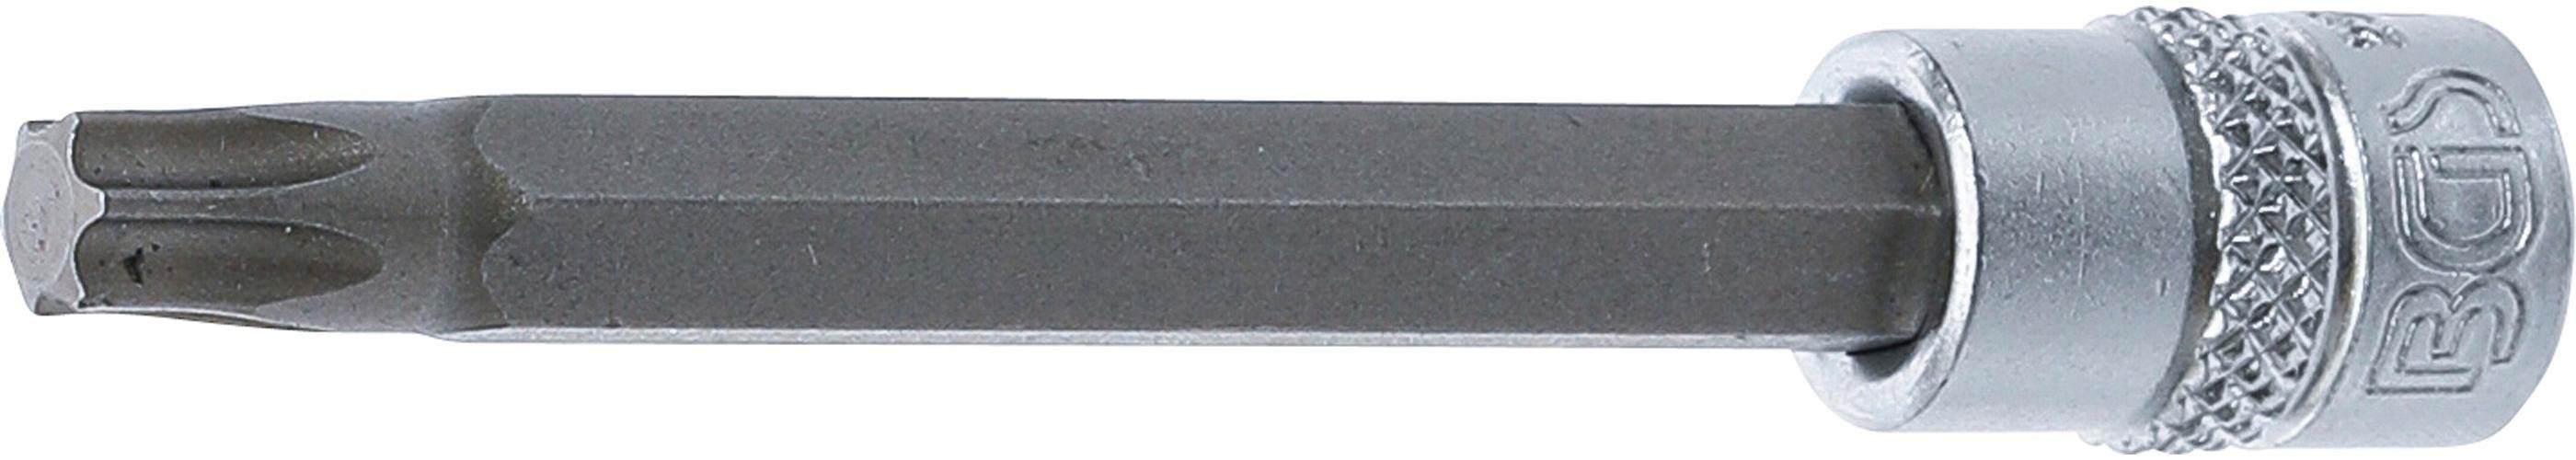 BGS technic Bit-Schraubendreher Bit-Einsatz, Länge 75 mm, Antrieb Innenvierkant 6,3 mm (1/4), T-Profil (für Torx) T35